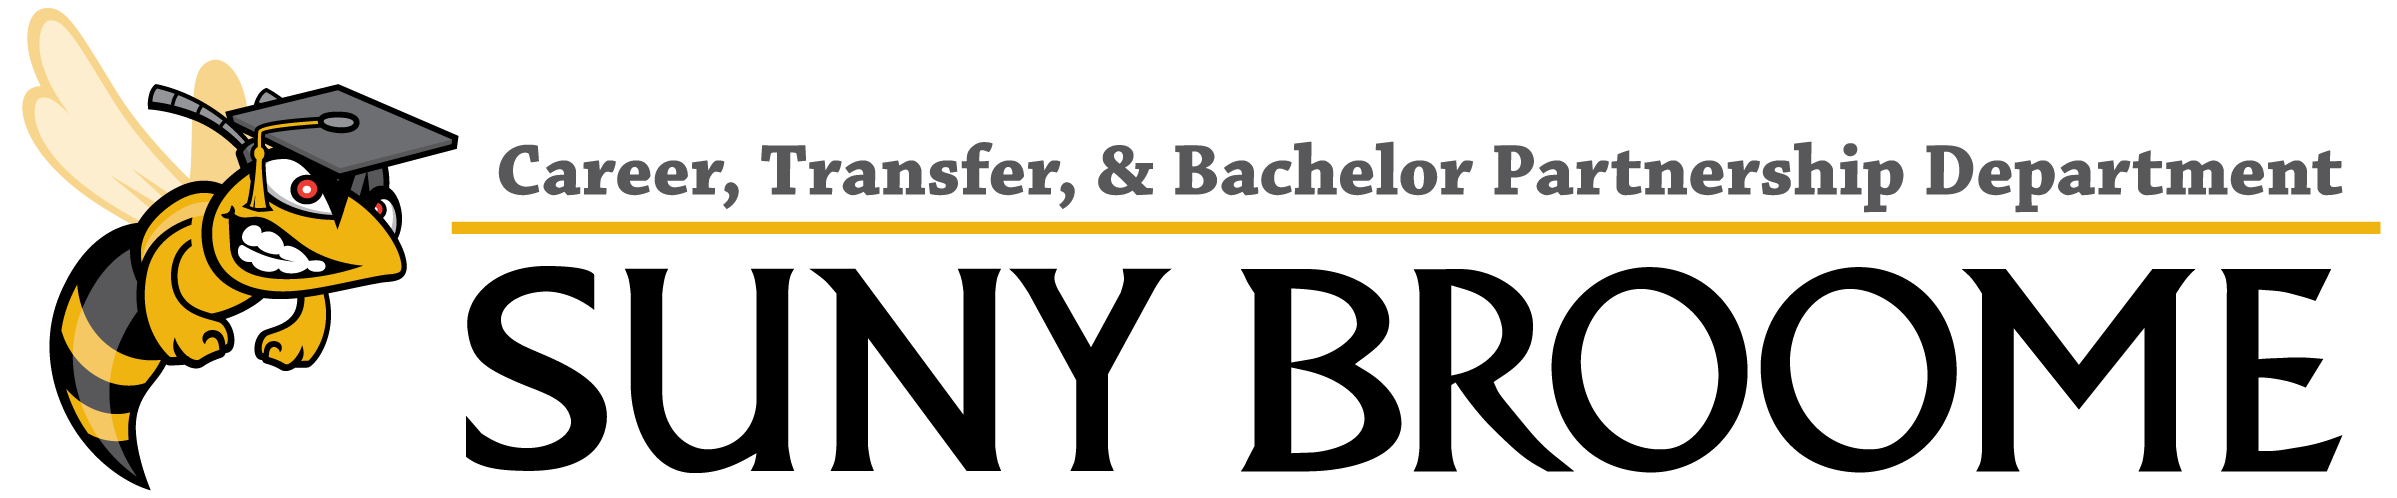 Career, transfer, and bachelor partnership department